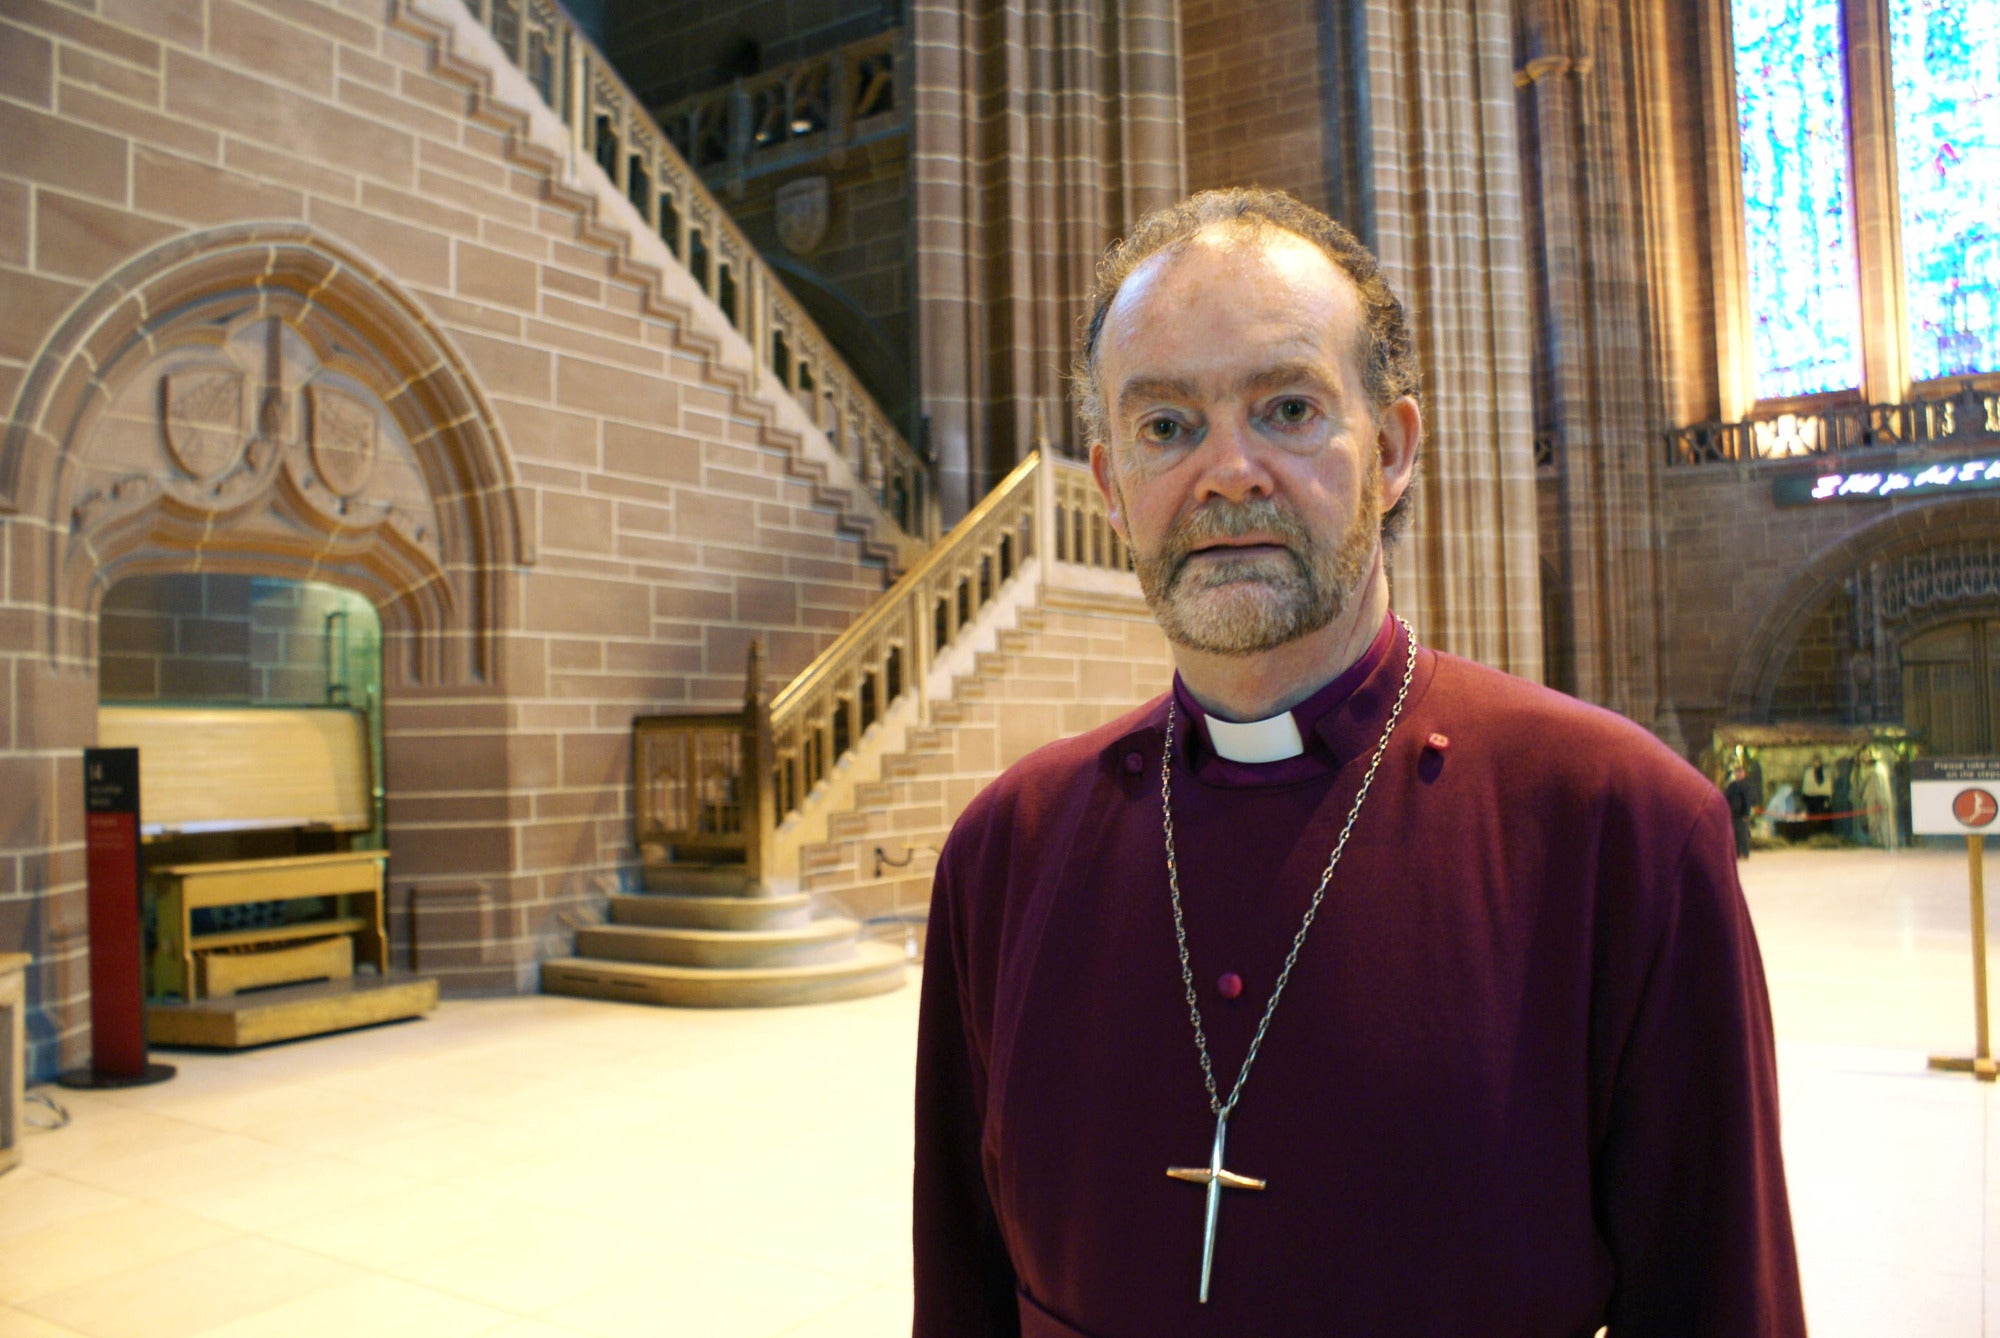 In Liverpool Cathedral: Bishop James Jones